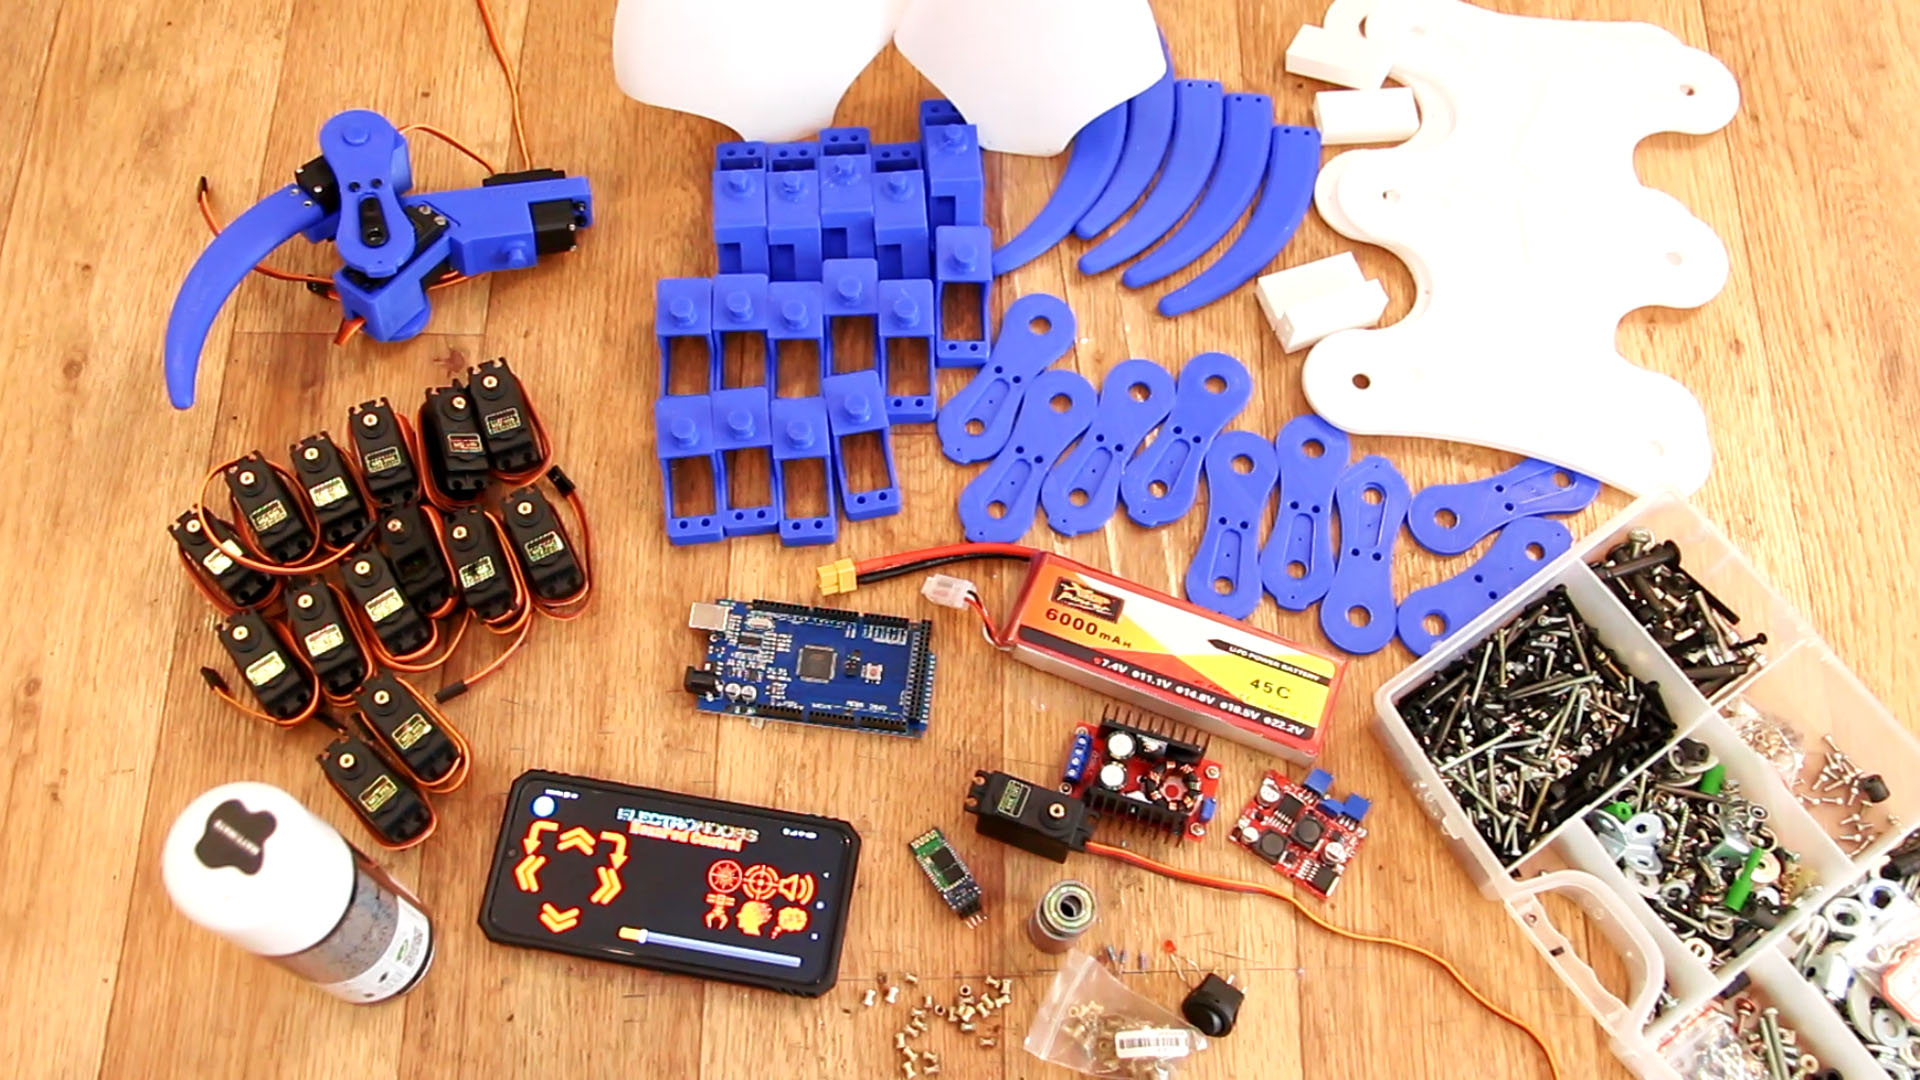 DIY homemade Arduino HEXAPOD servo 3D printed